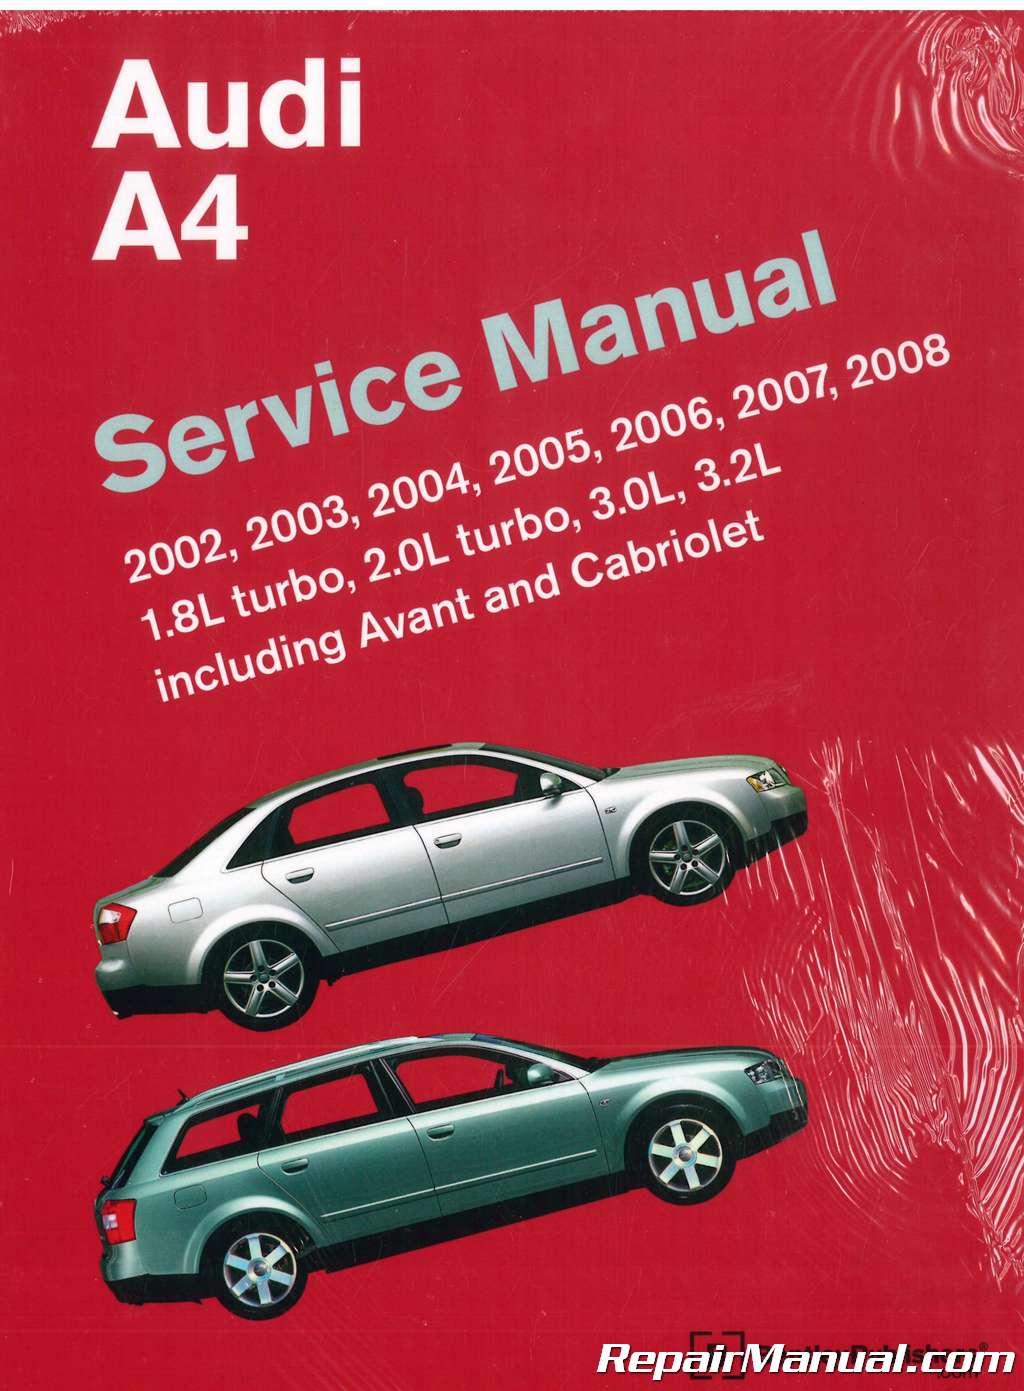 audi a4 2008 service manual